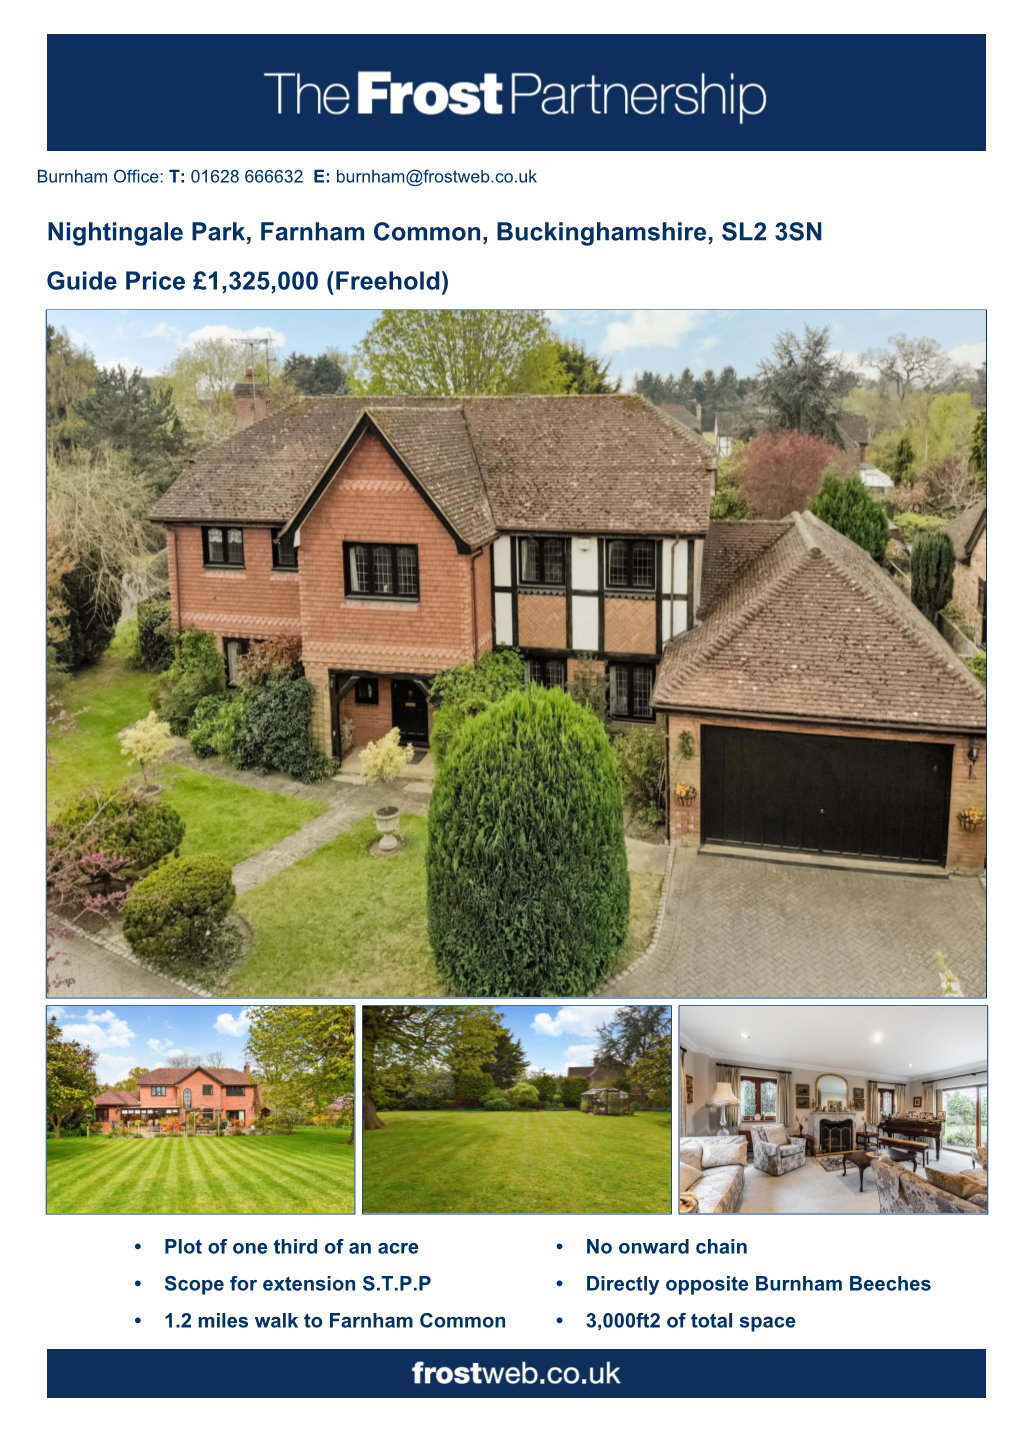 Nightingale Park, Farnham Common, Buckinghamshire, SL2 3SN Guide Price £1,325,000 (Freehold)